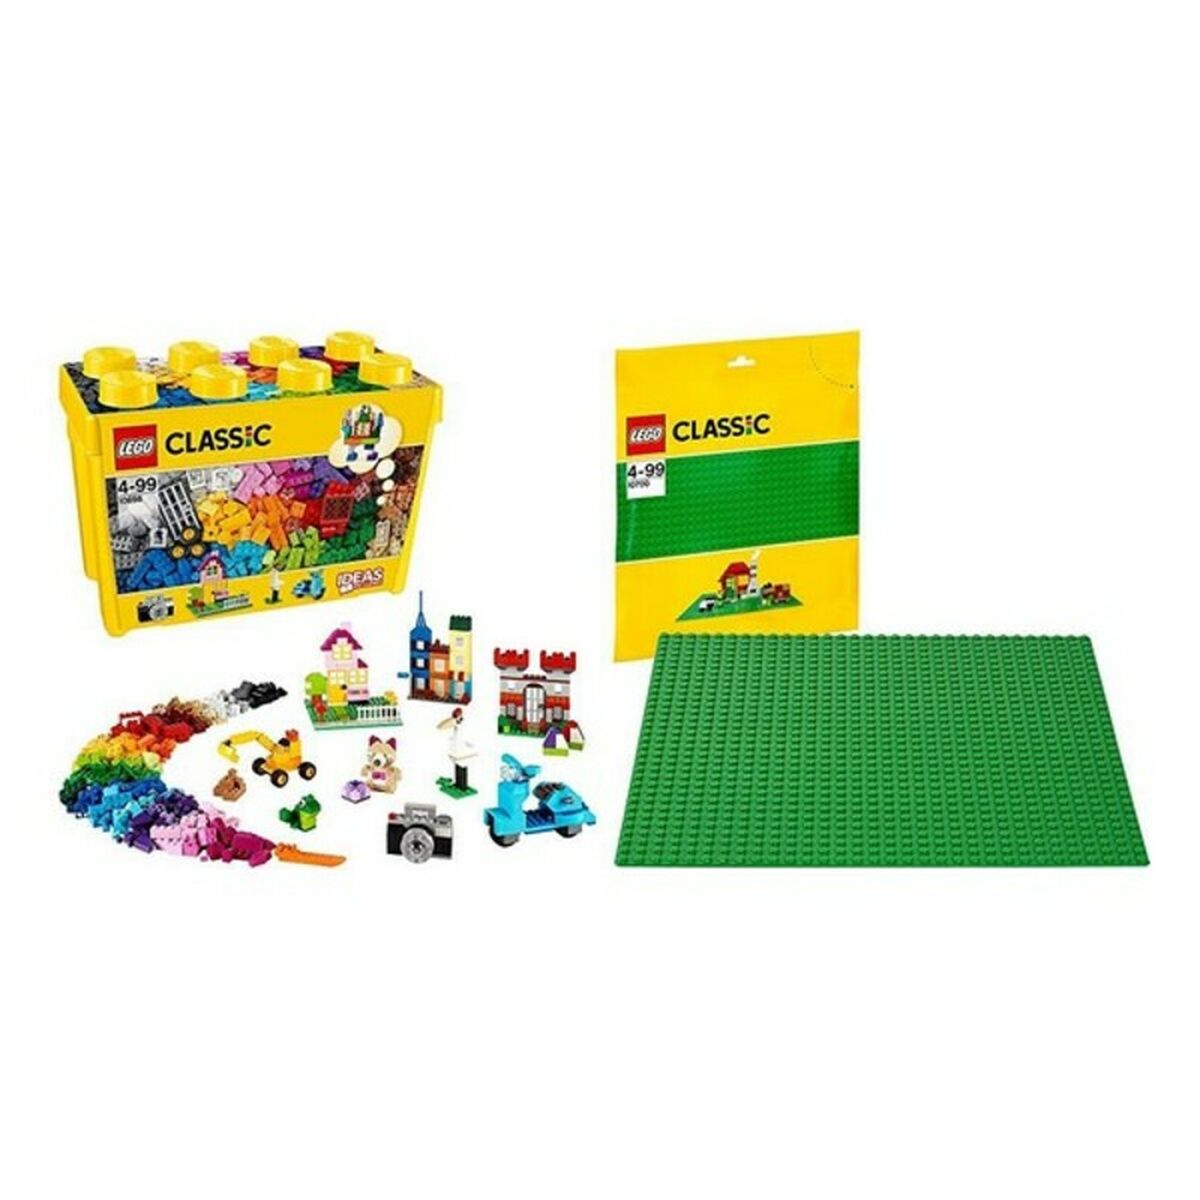 Playset Brick Box LEGO Classic 10698 (790 PC)